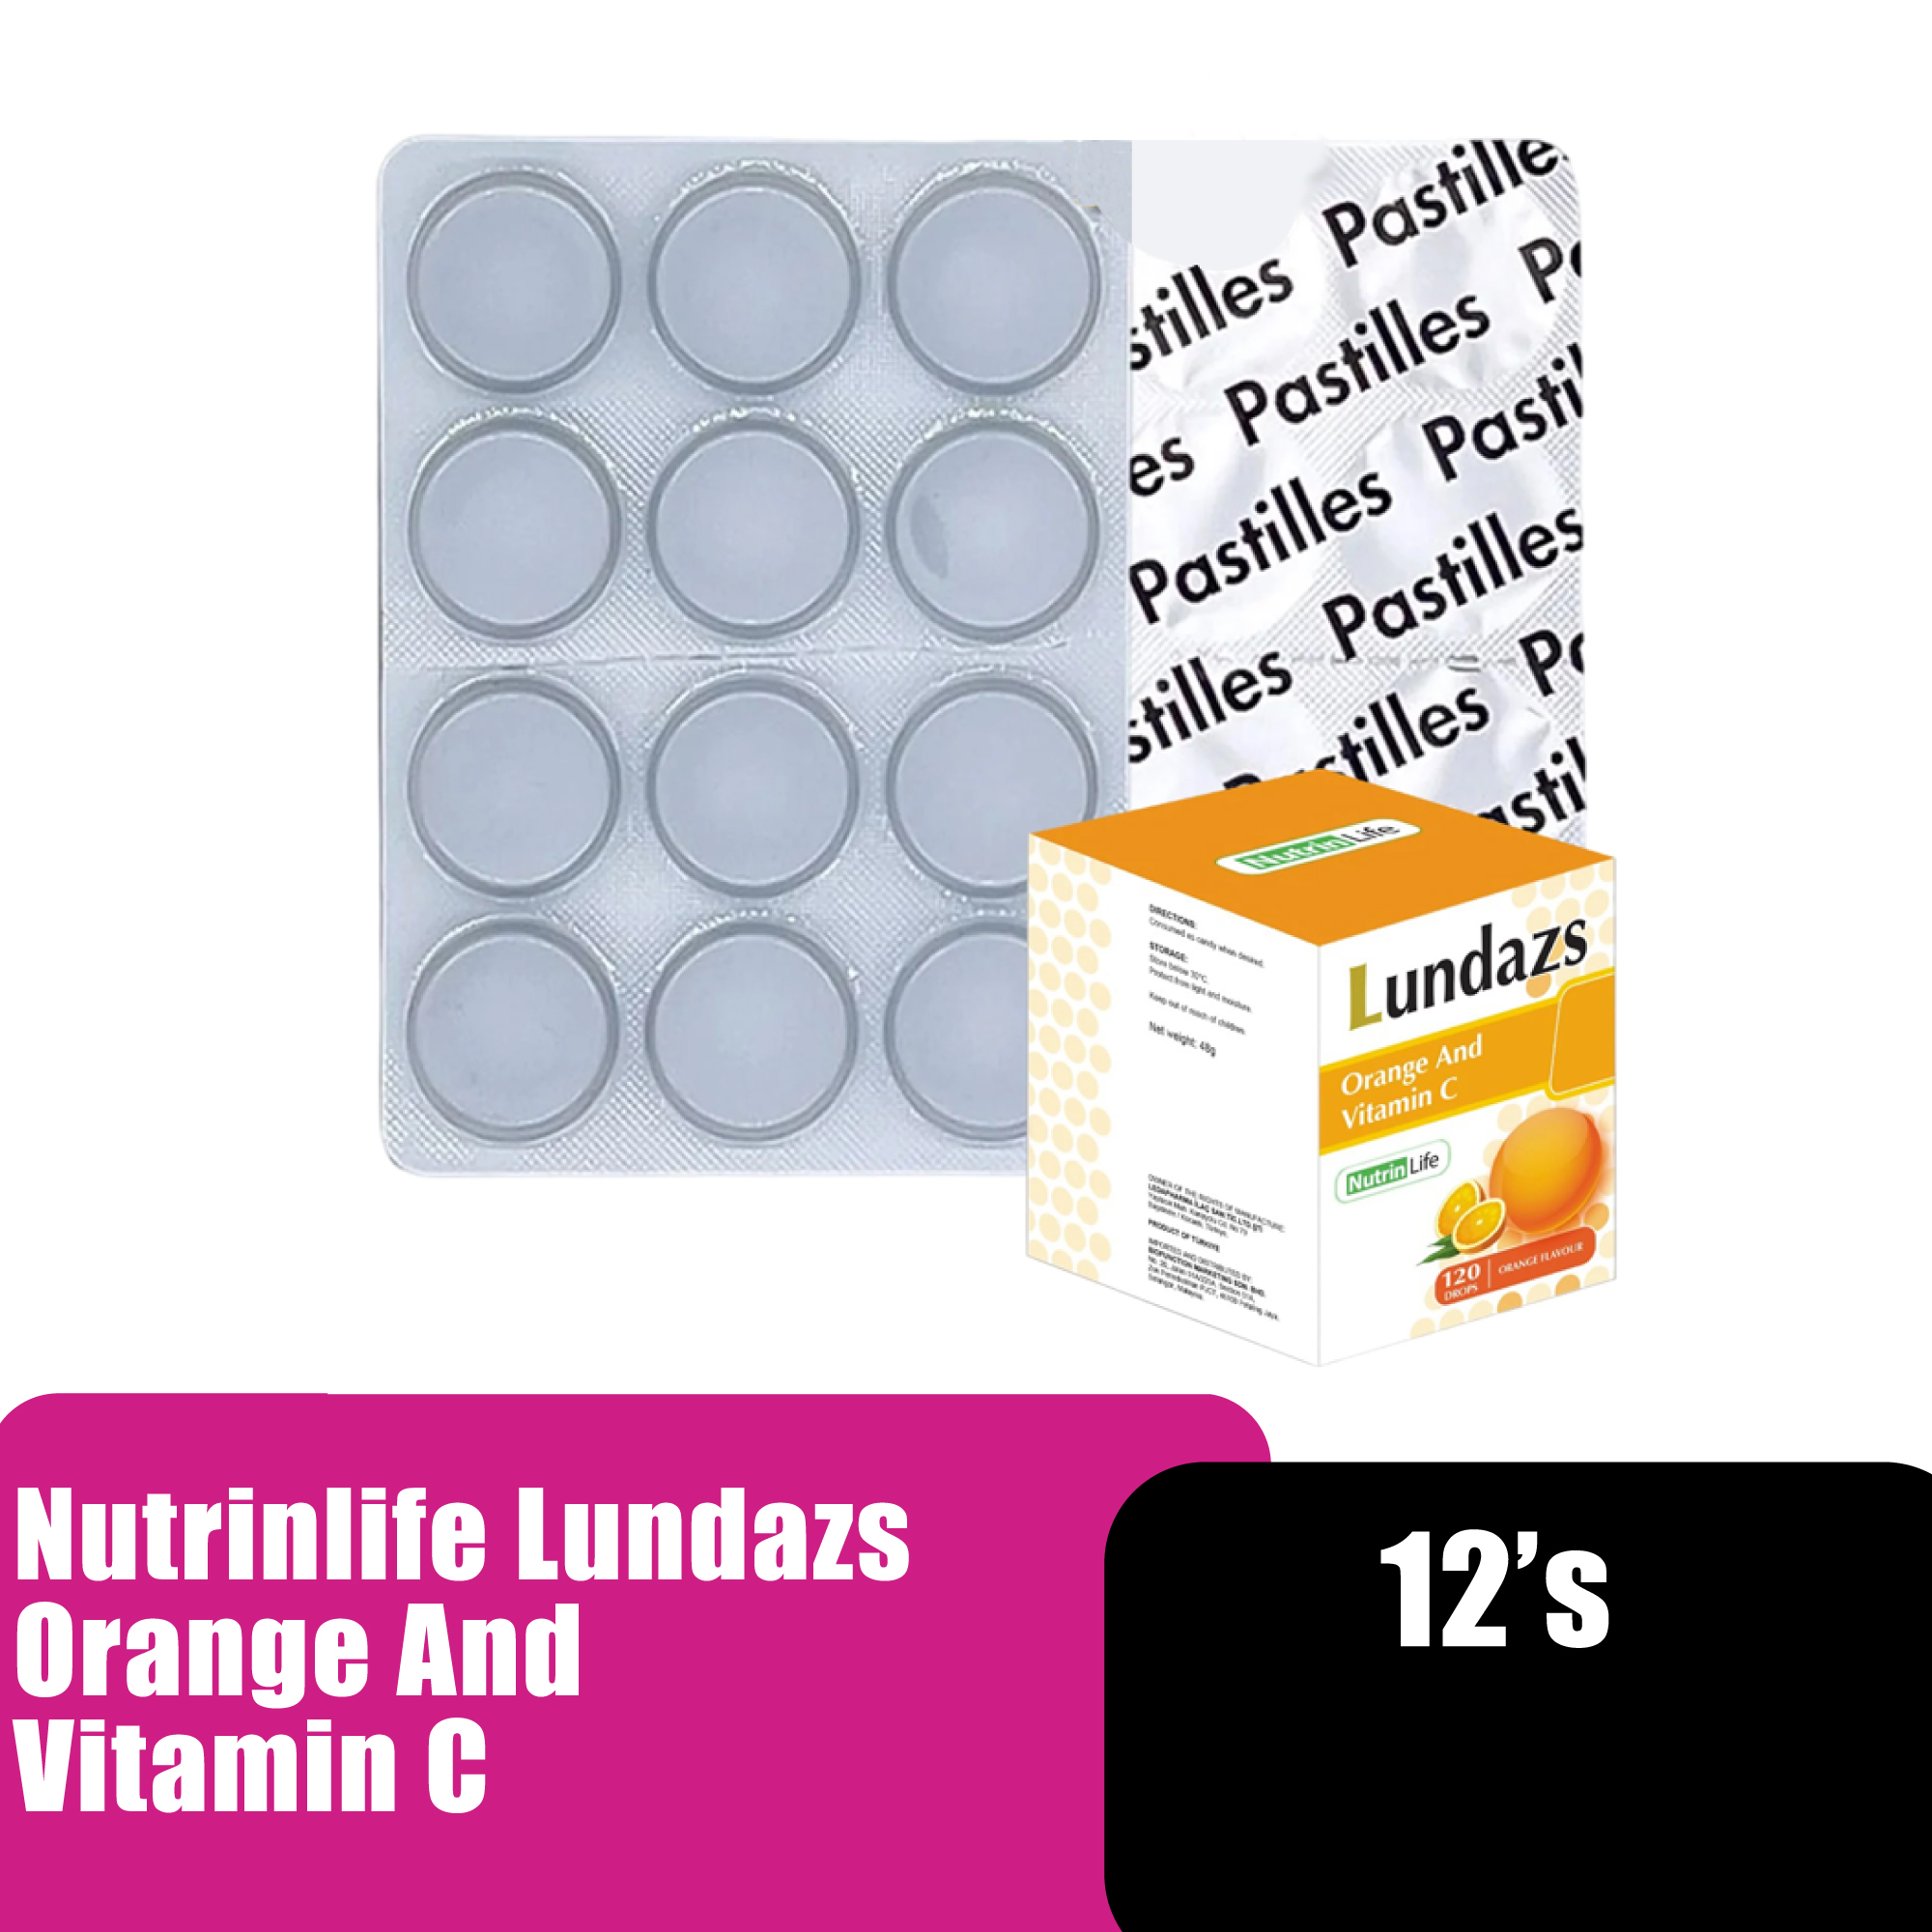 NUTRINLIFE Lundazs Orange & Vitamin C (12's), Sore Throat Cough Relief Lozenges, Ubat Sakit Tekak, Ubat Batuk, 咳嗽